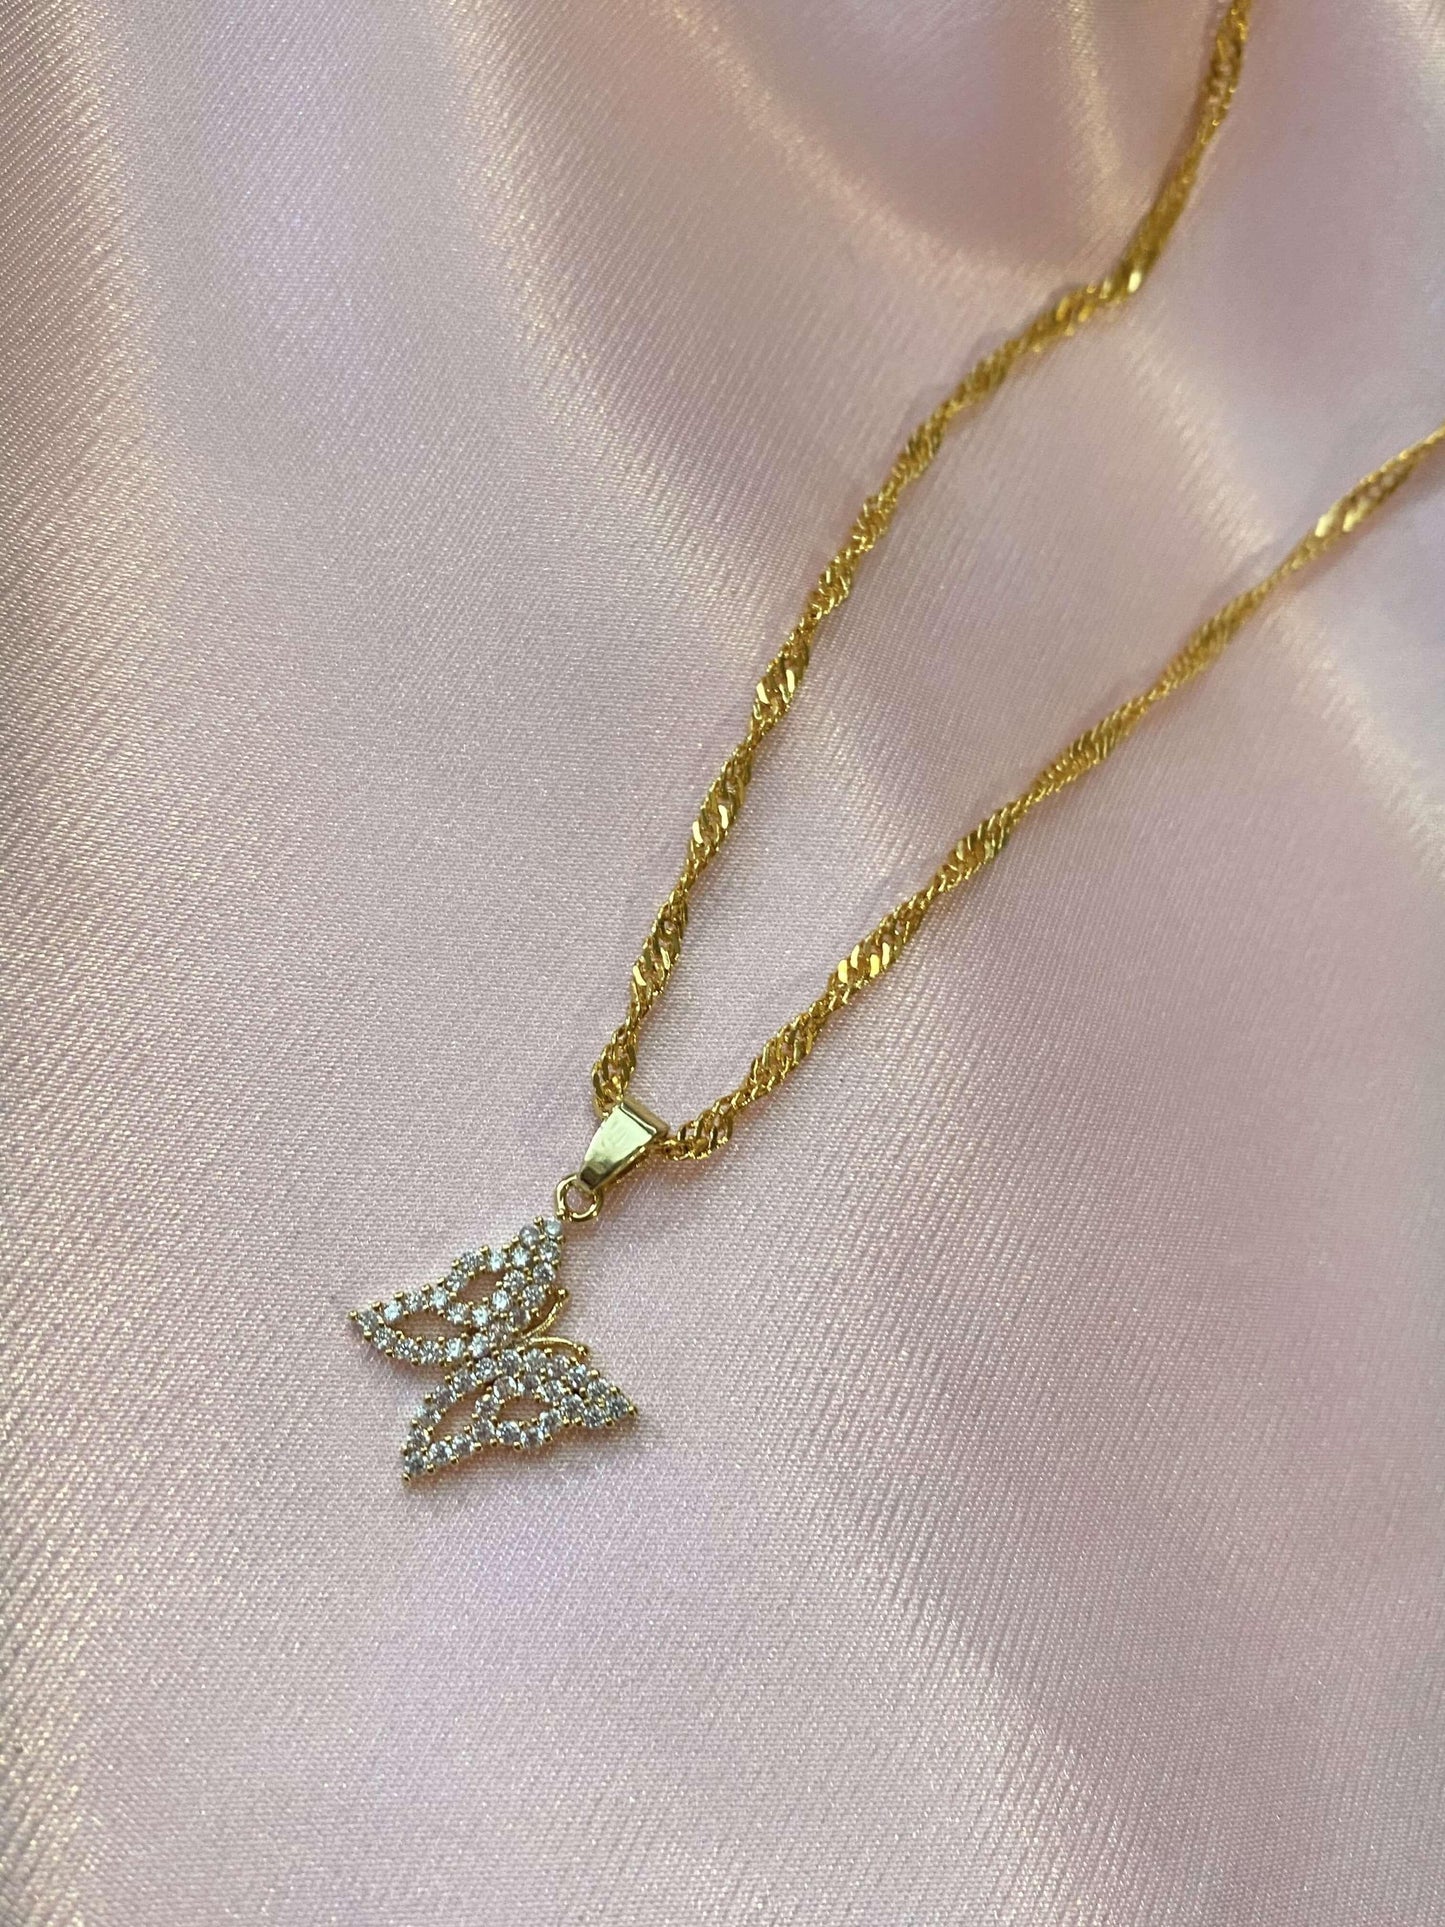 Luxe Butterfly Necklace (18k gold) - Luna Alaska Jewelry